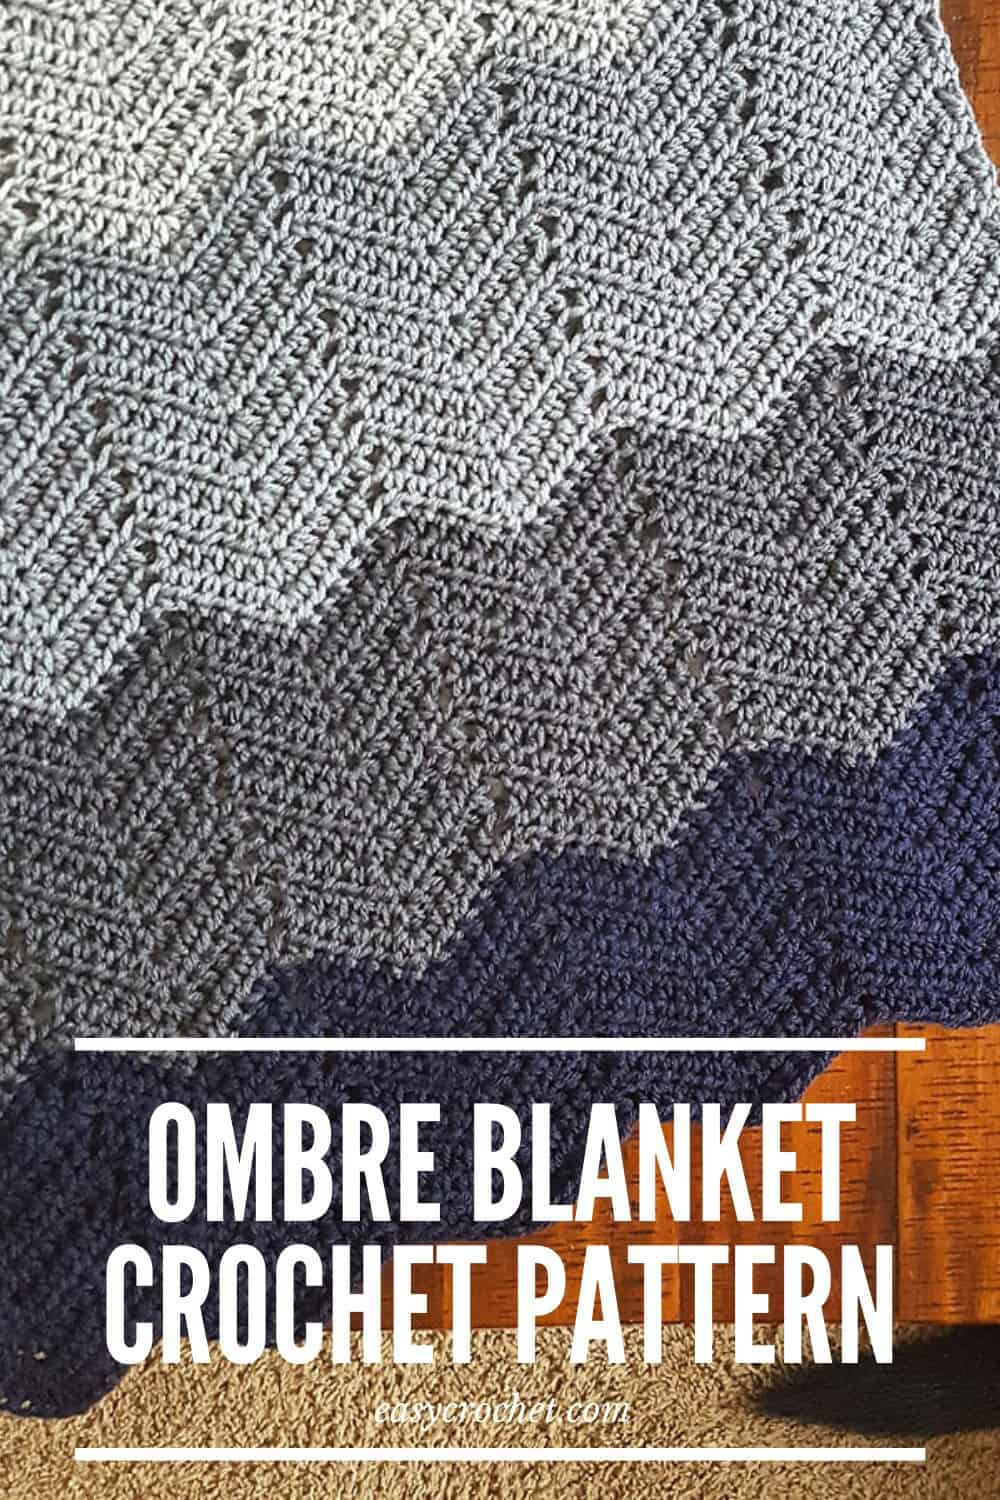 Crochet this easy ombre ripple blanket with this FREE crochet blanket pattern from Easy Crochet via @easycrochetcom